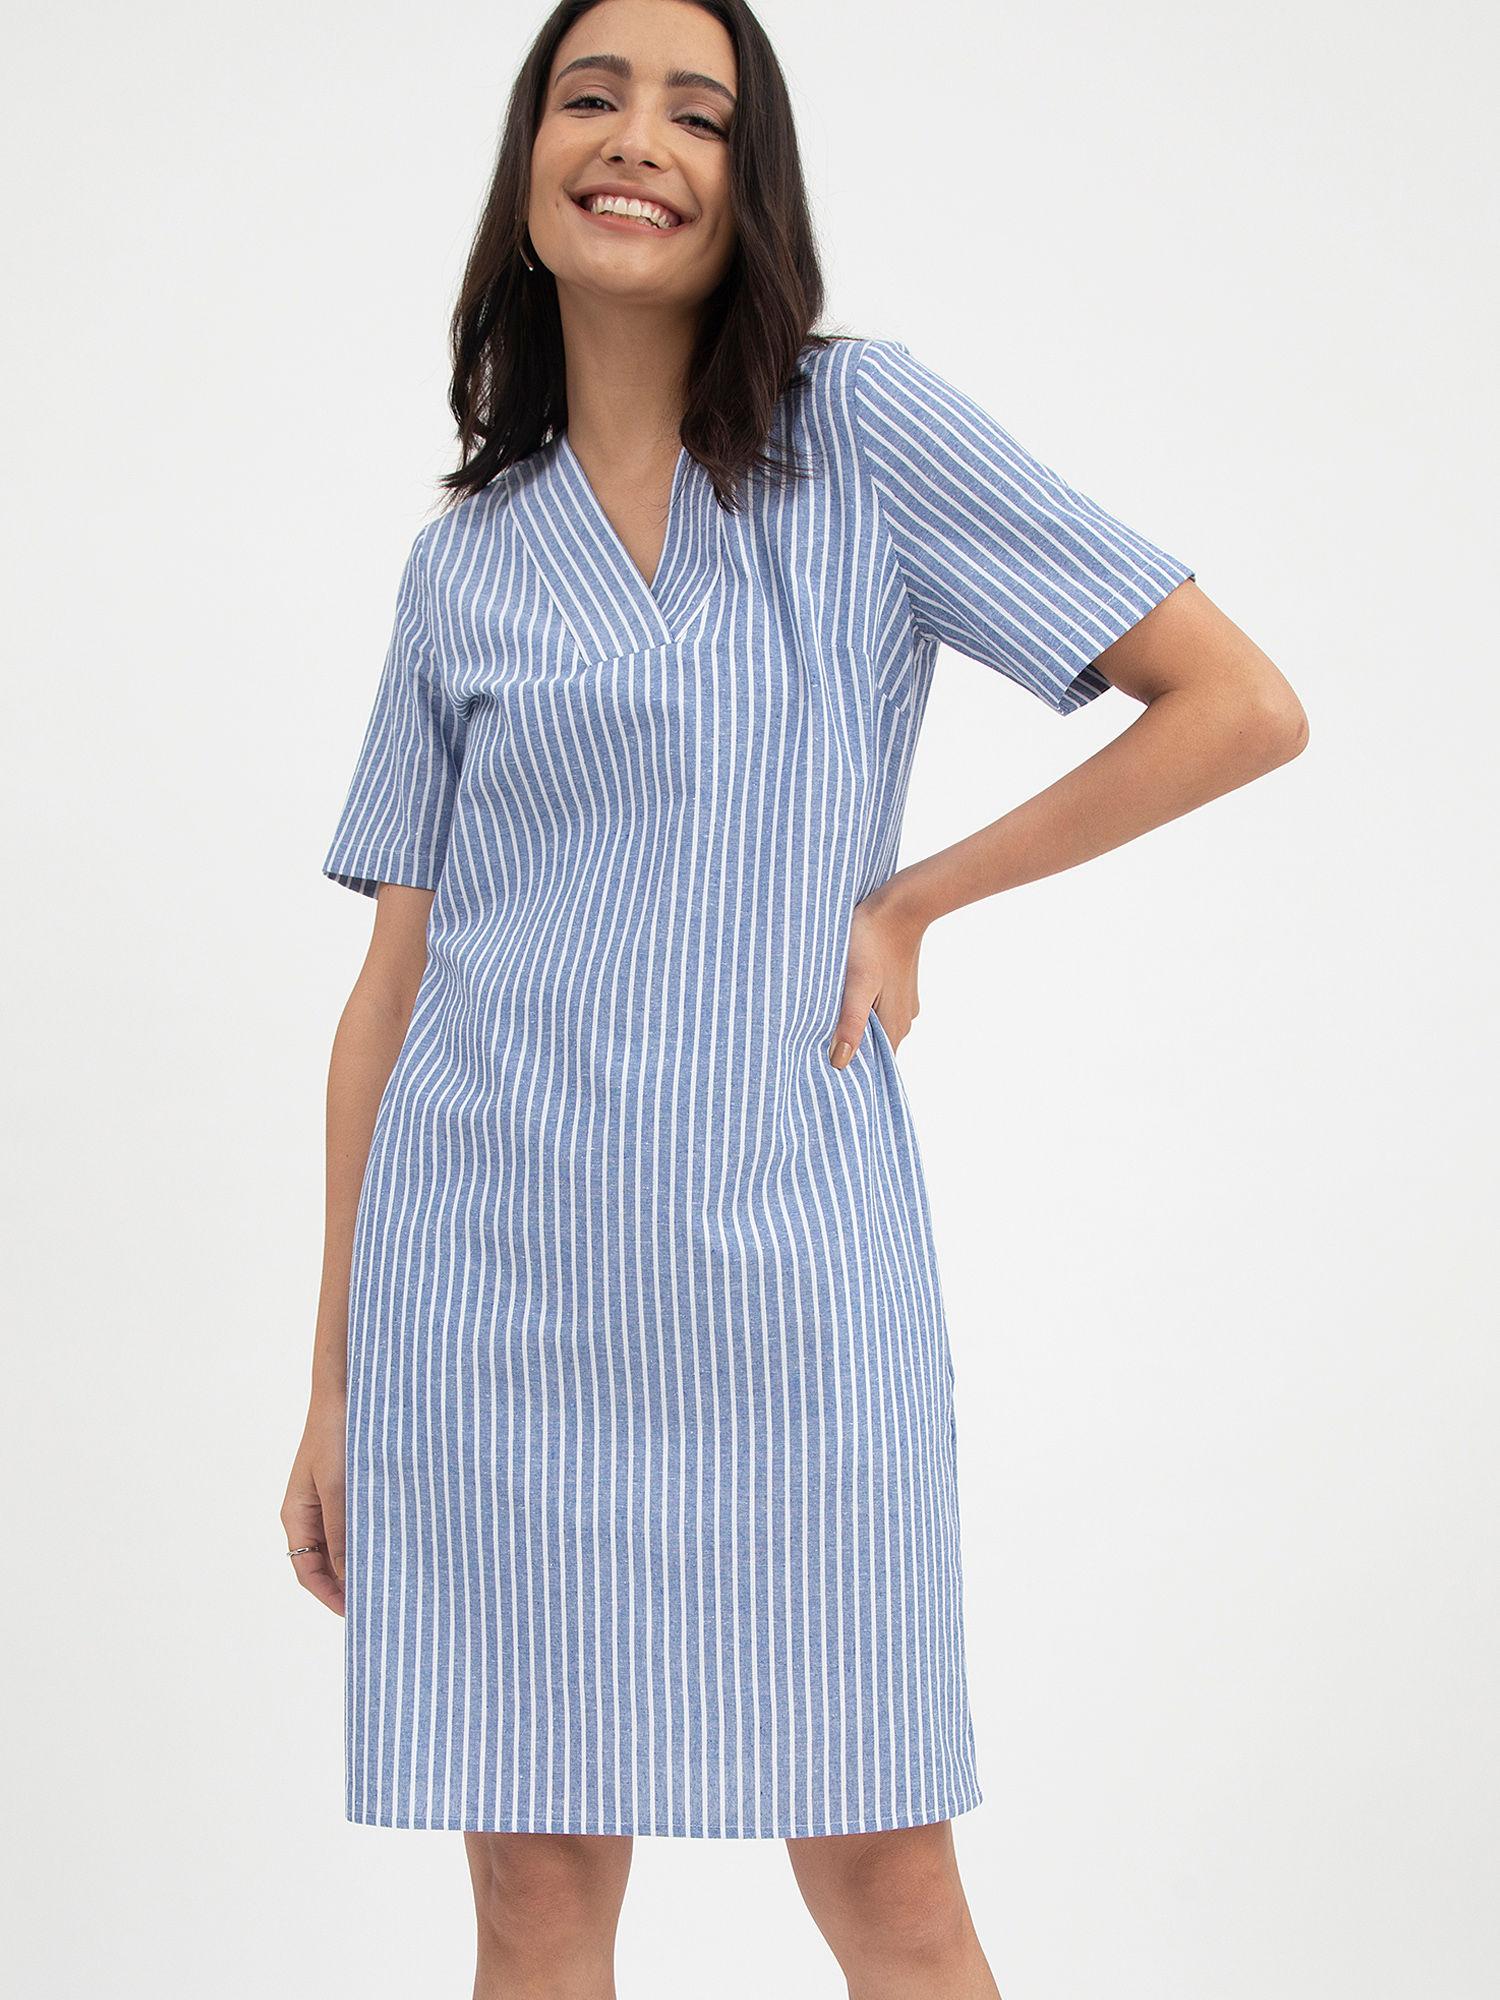 linen-striped-v-neck-shift-dress---blue-and-white